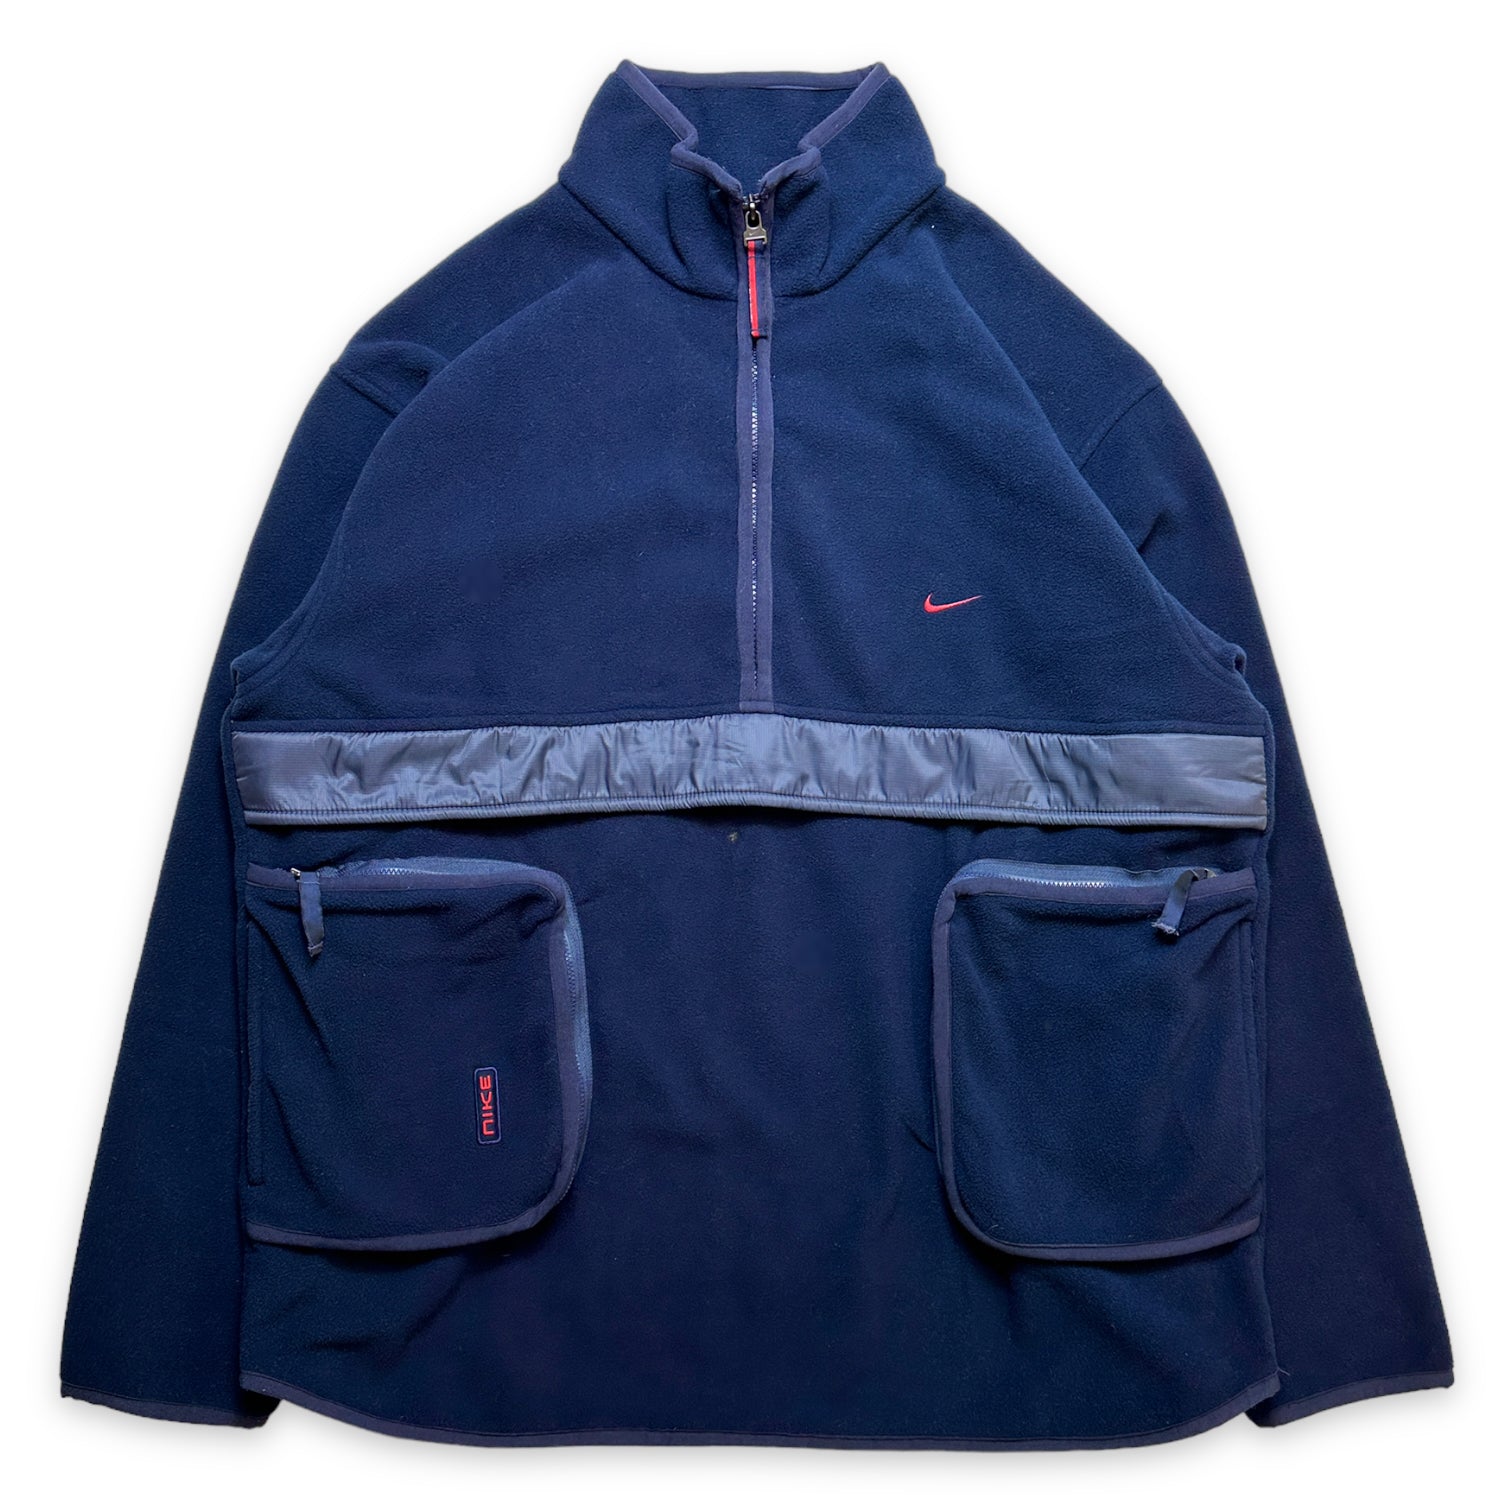 Early 2000's Nike 3D Pocket Fleece Half Zip - Large / Extra Large